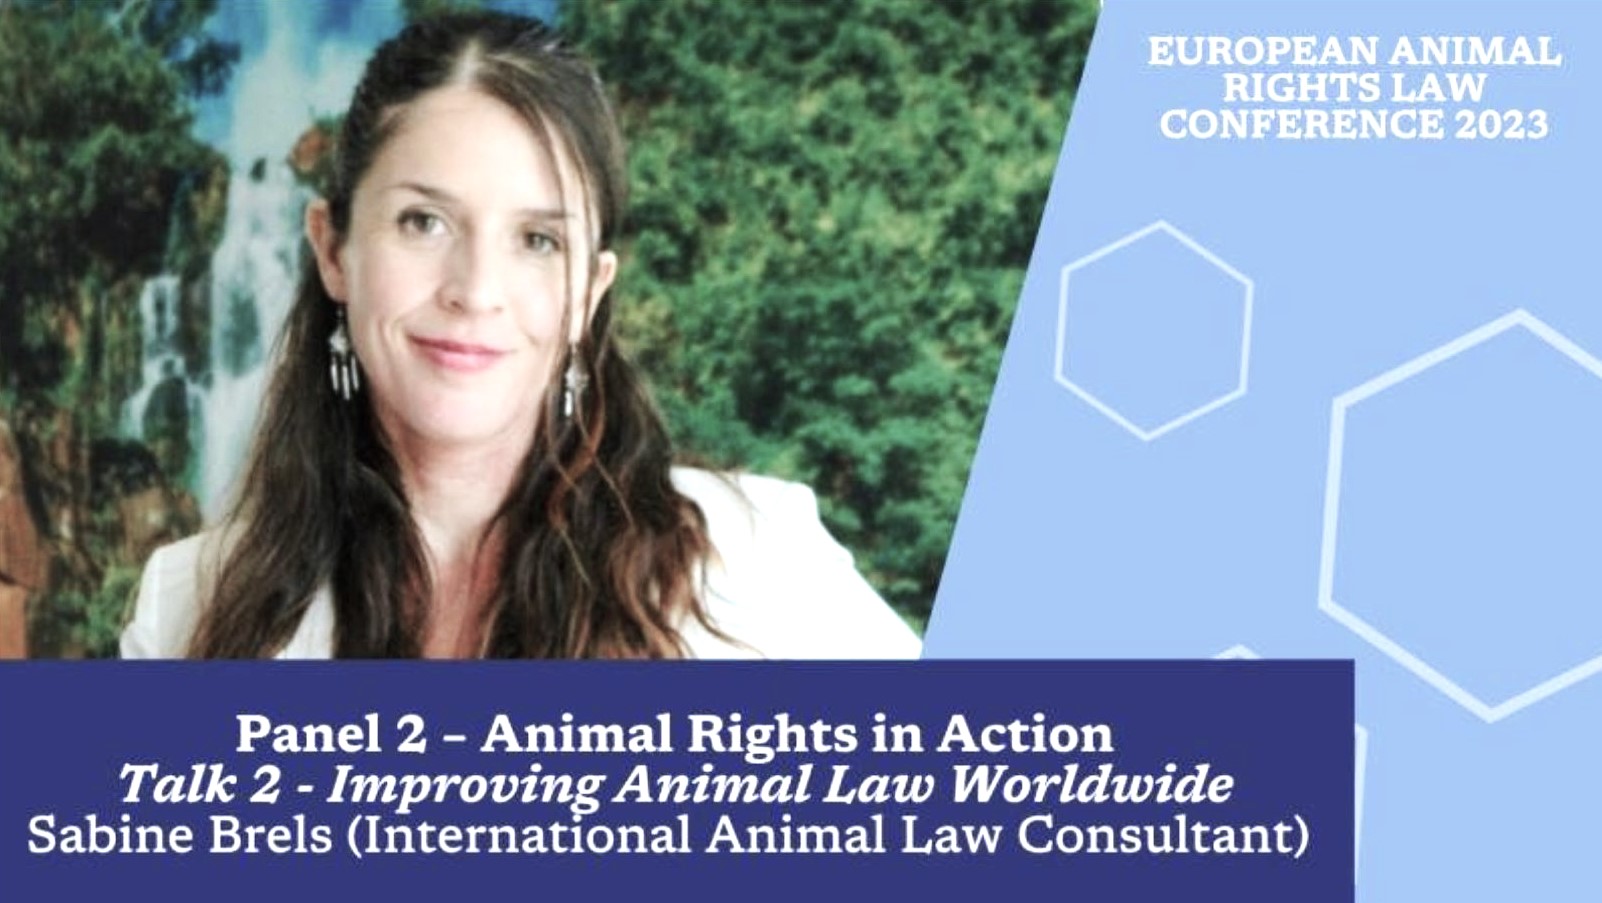 World Animal Justice (WAJ) Launch-Cambridge Animal Rights Law Conference-2023